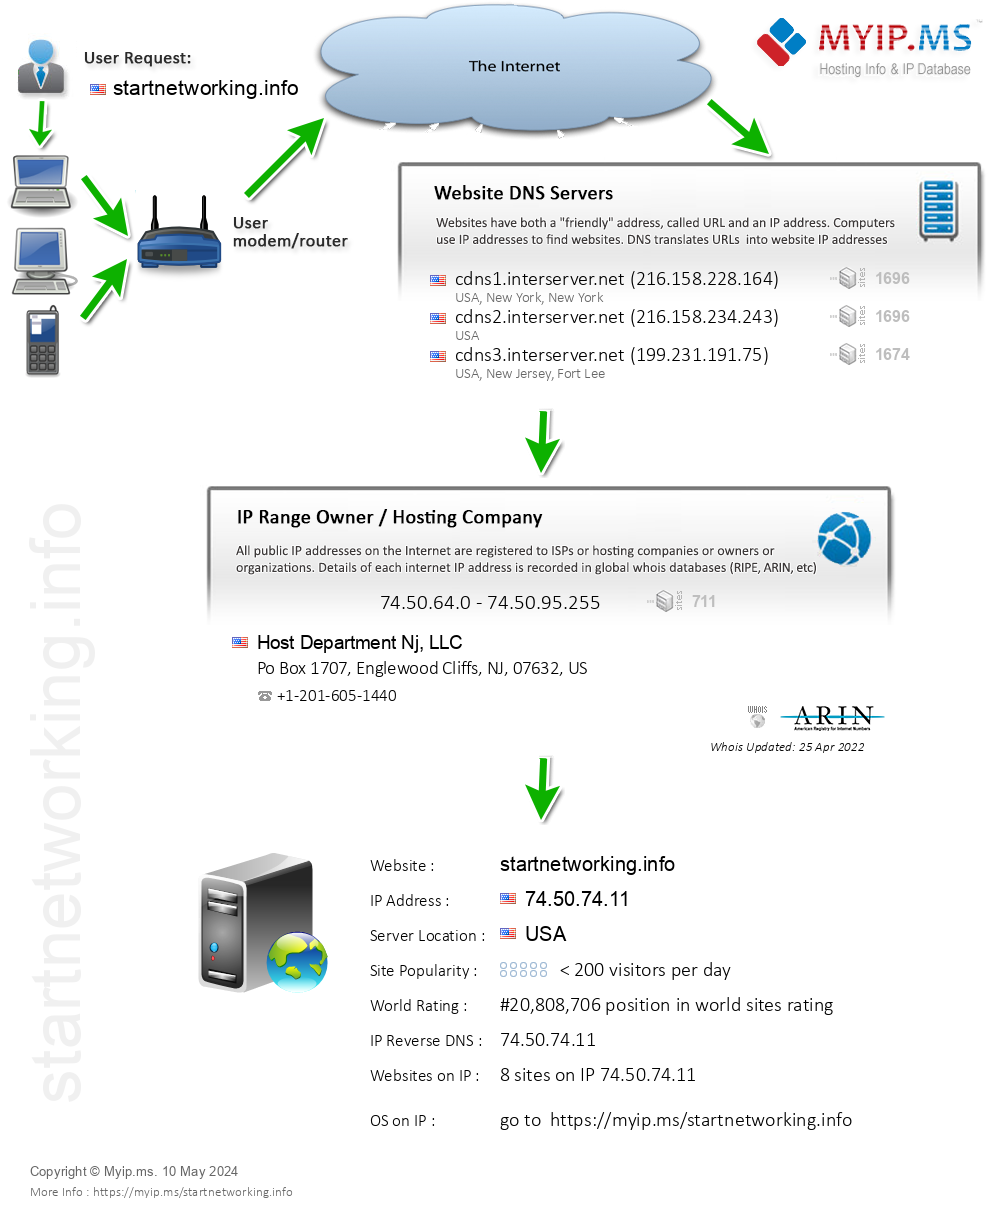 Startnetworking.info - Website Hosting Visual IP Diagram